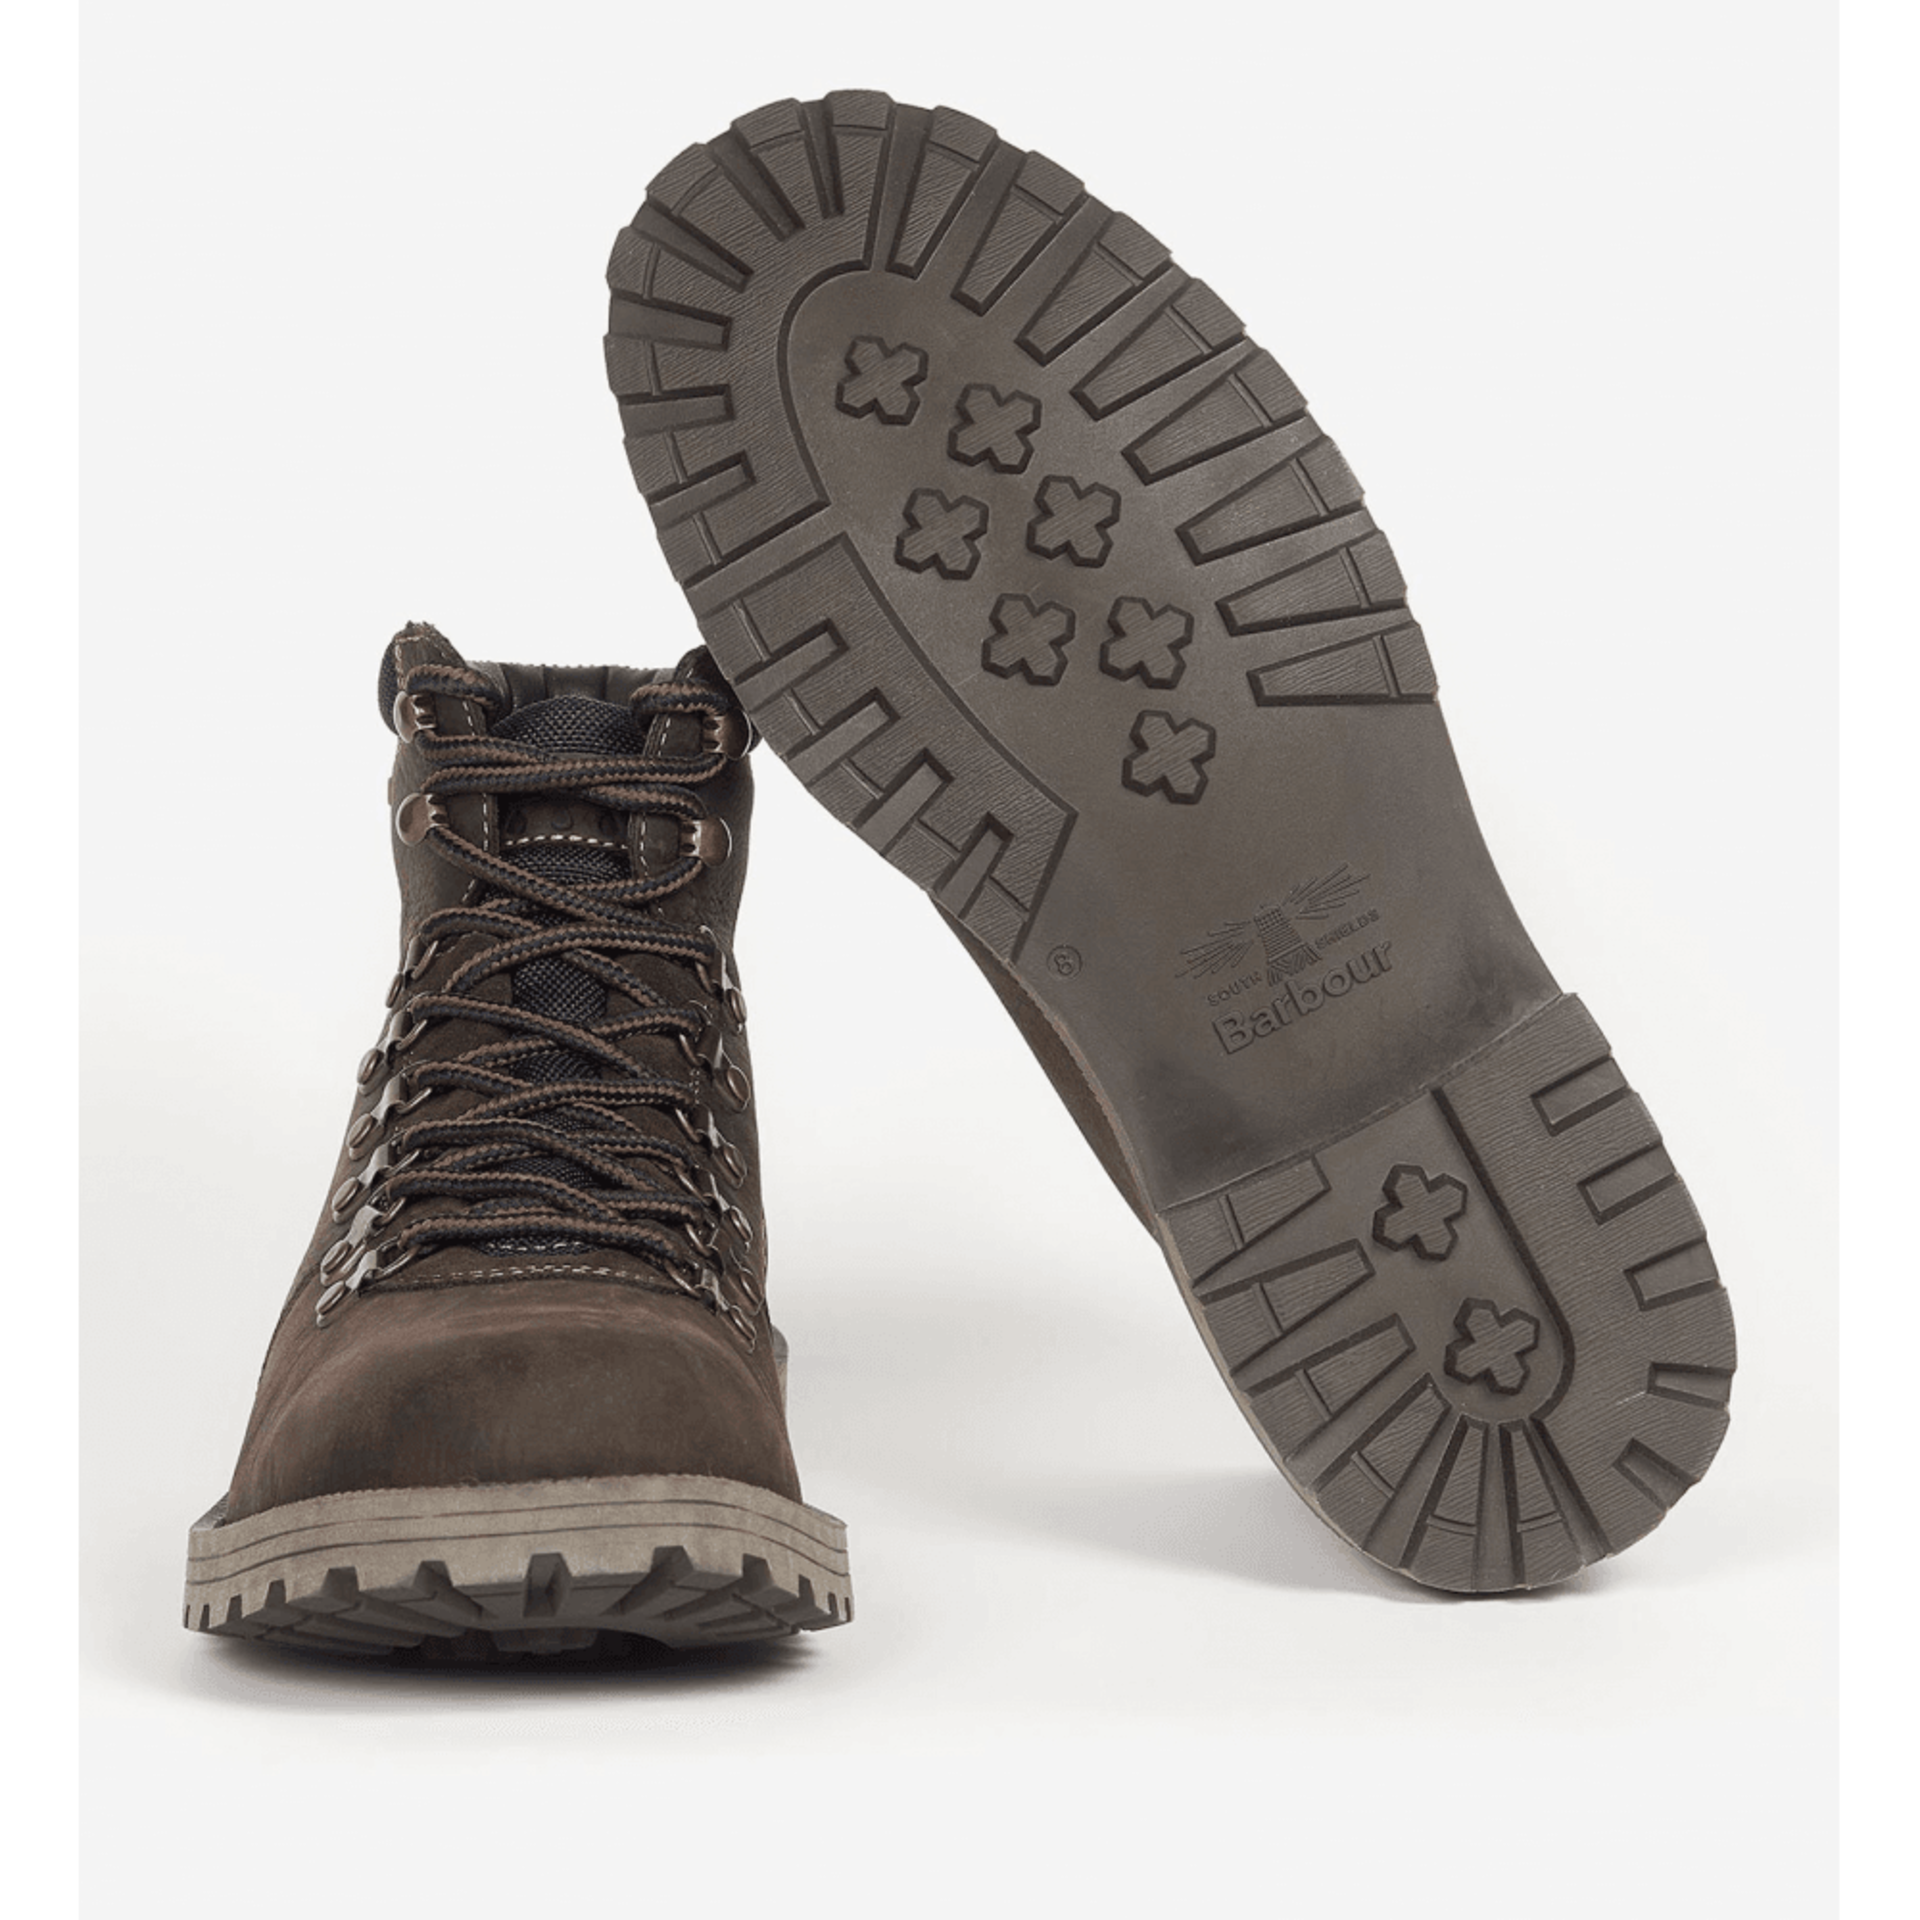 New Size 10 Barbour Oak Quantock Hiker Boots - RRP £159. - Image 3 of 3